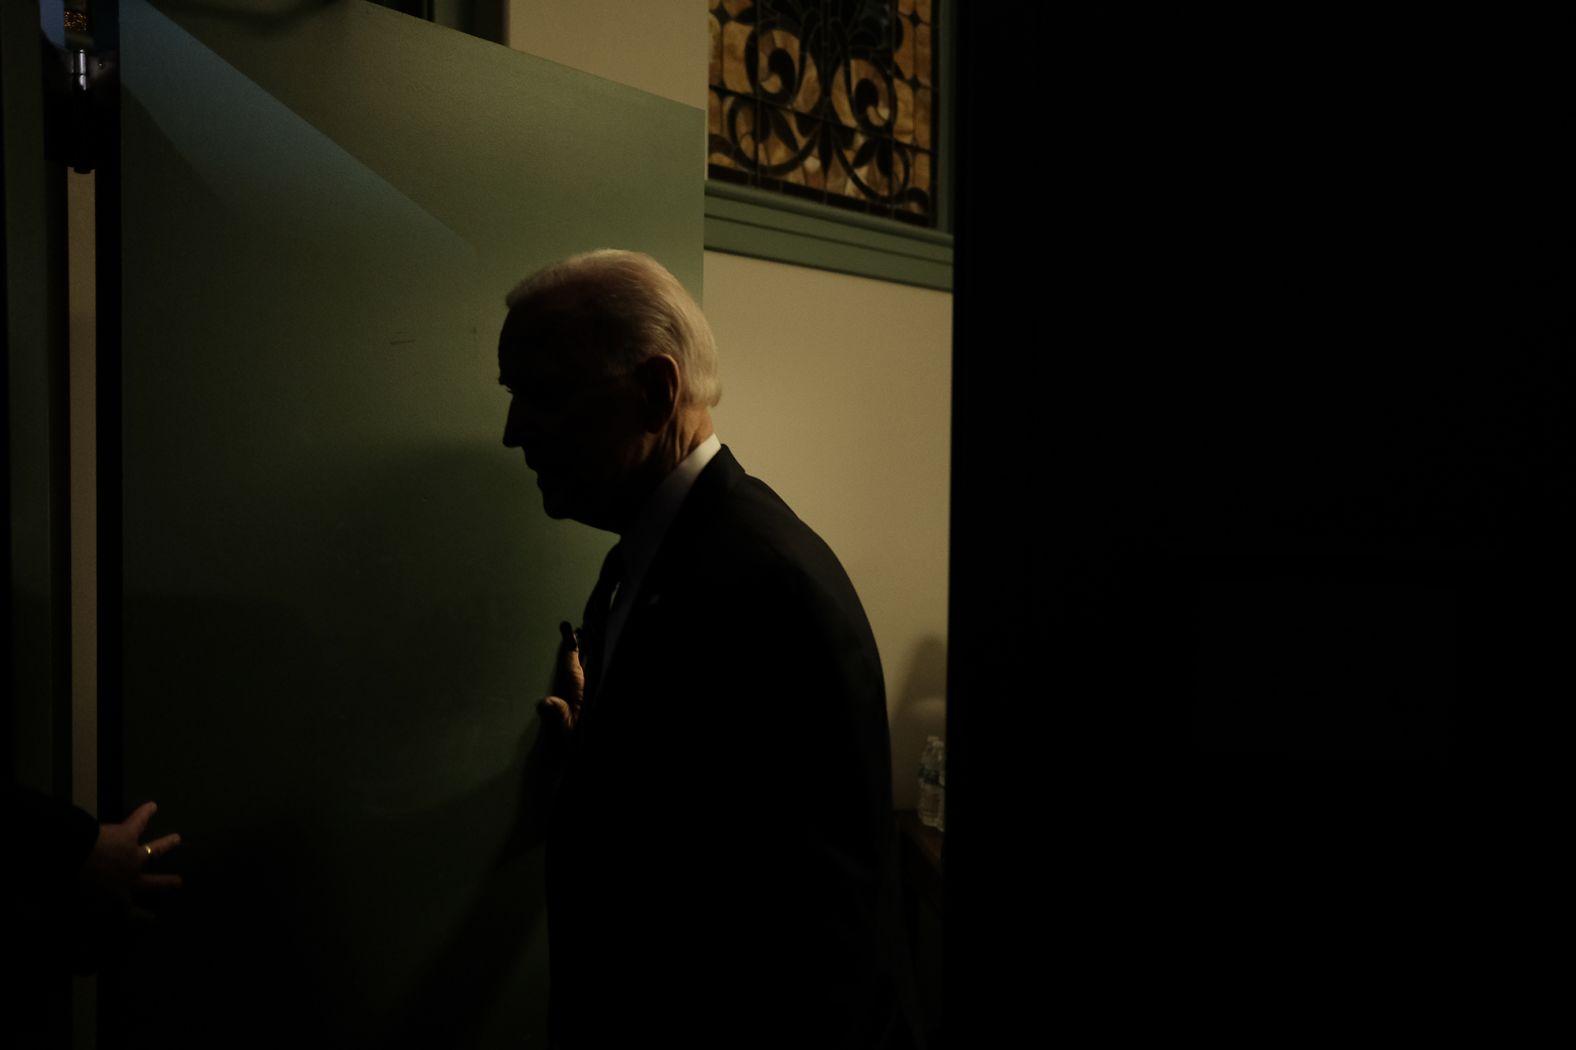 Biden heads backstage during a break in the debate.